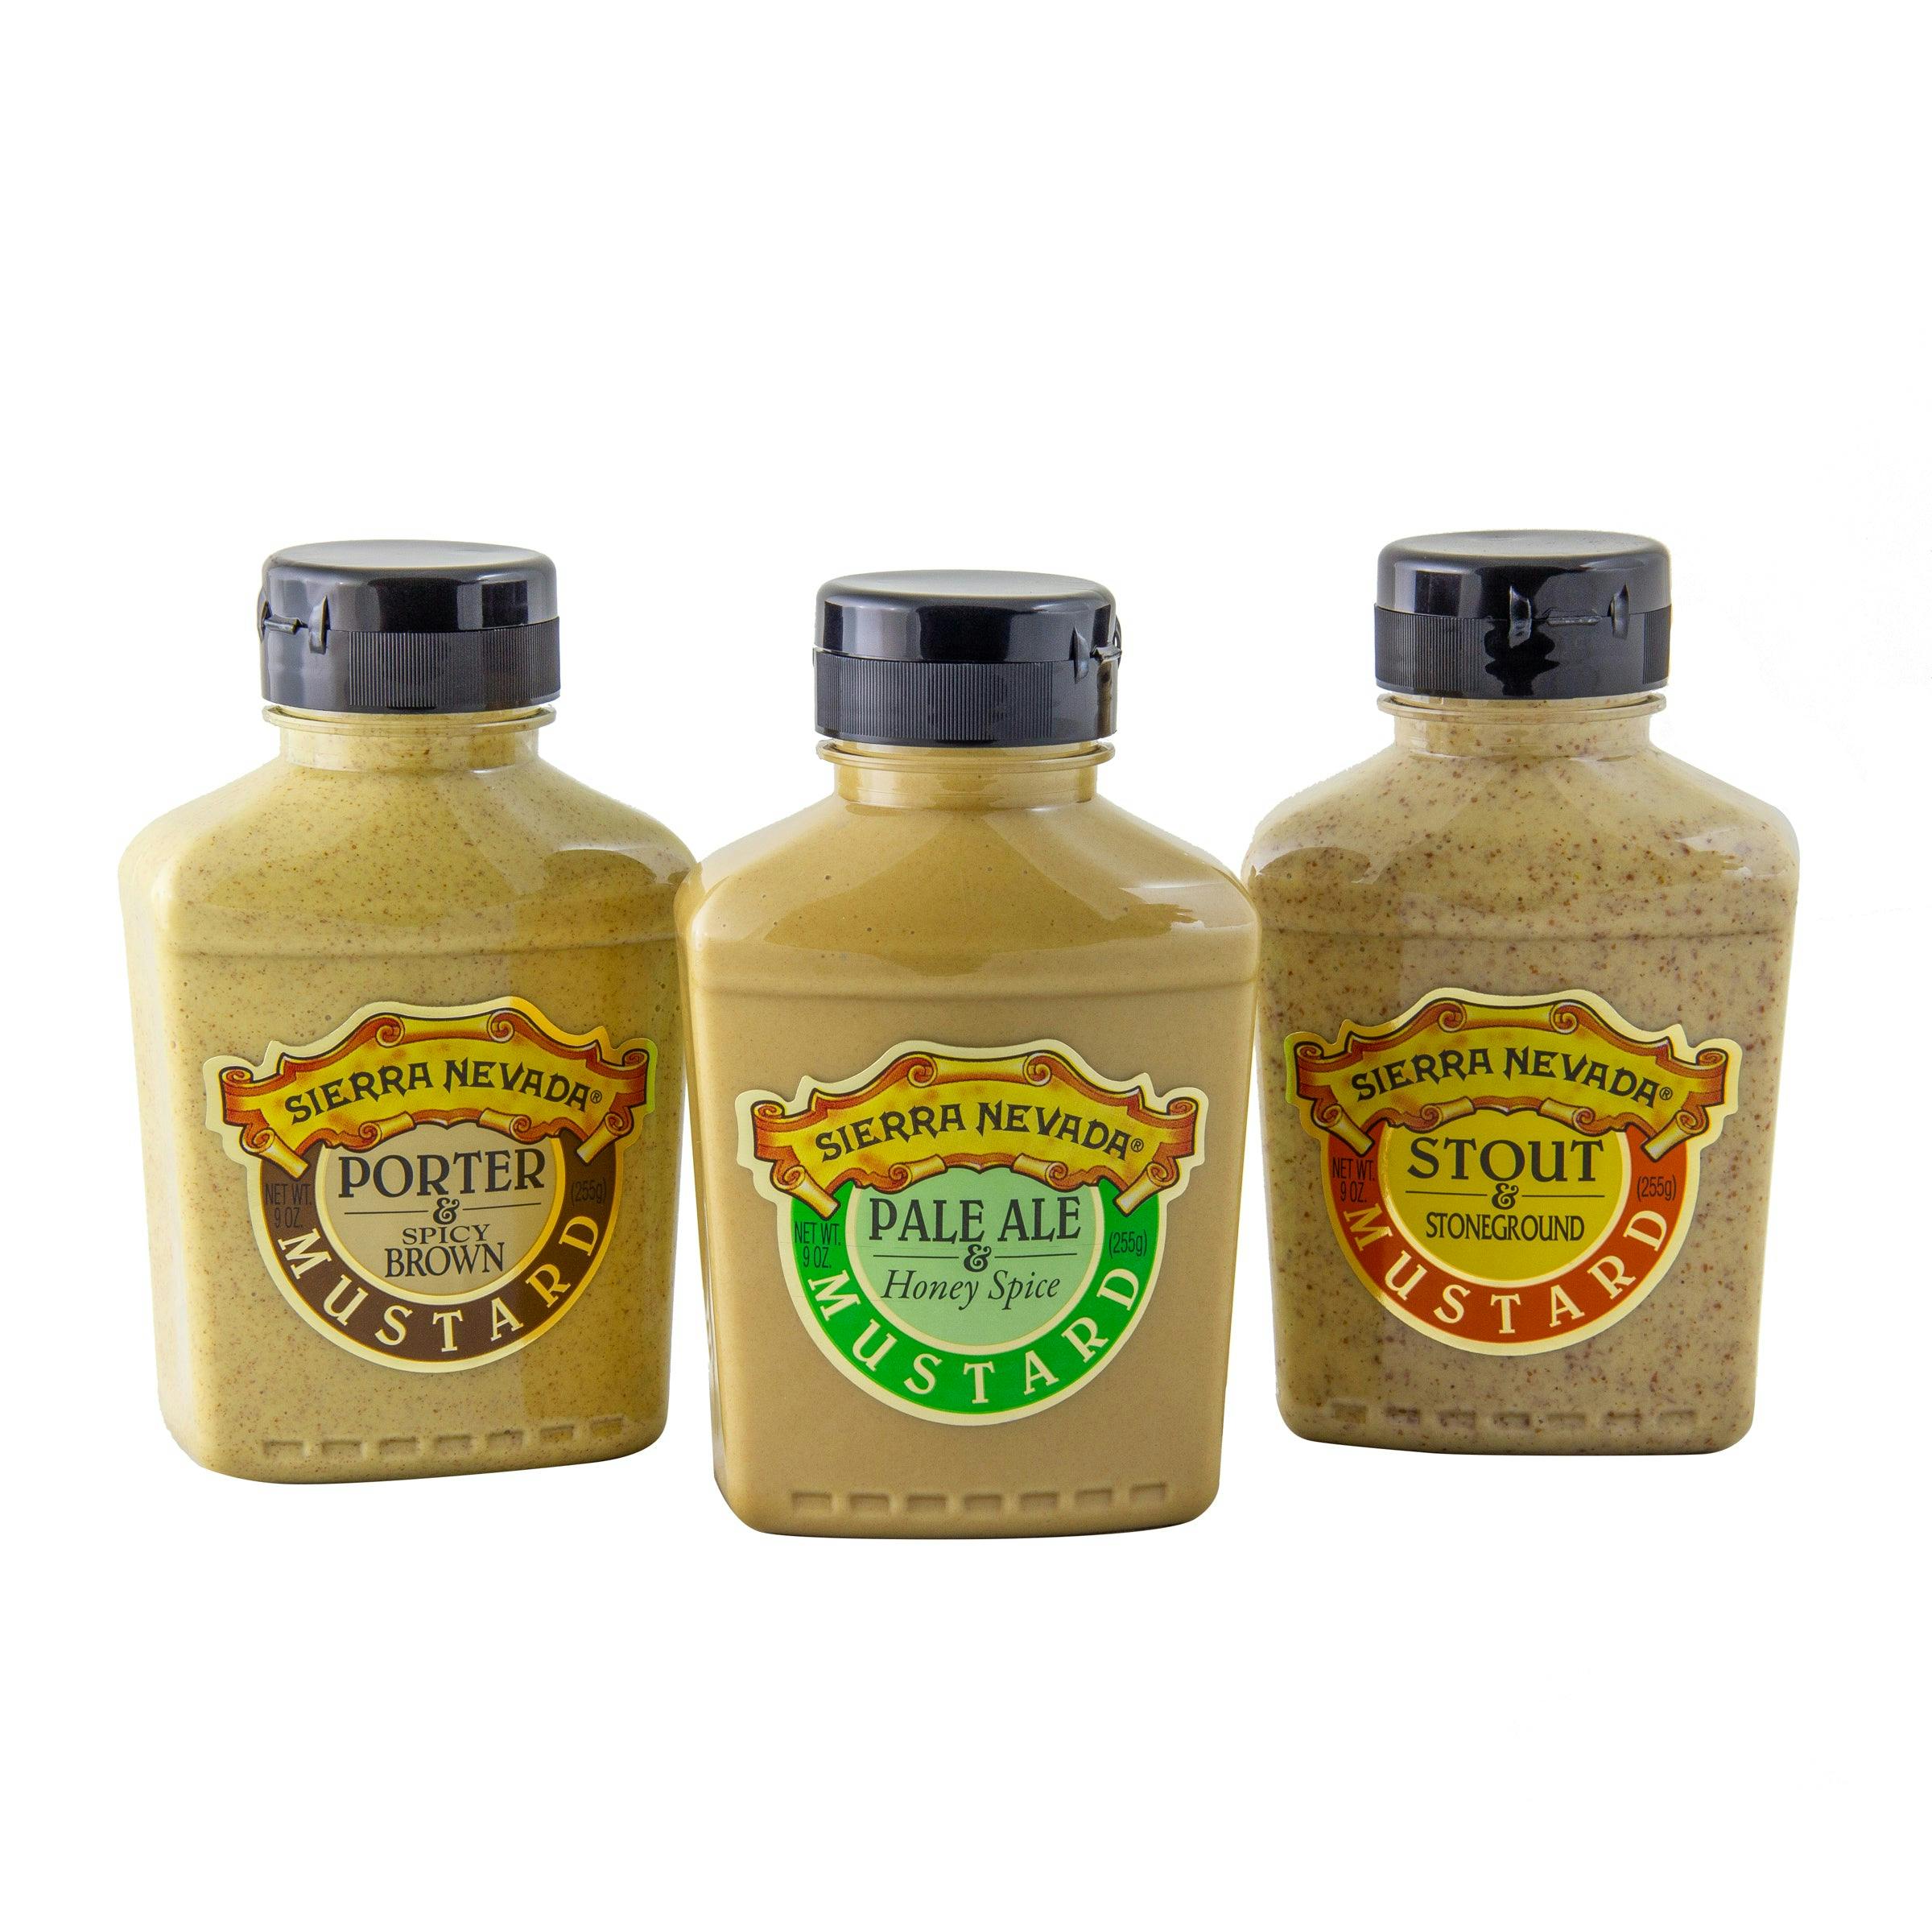 Trio of Sierra Nevada mustard bottles